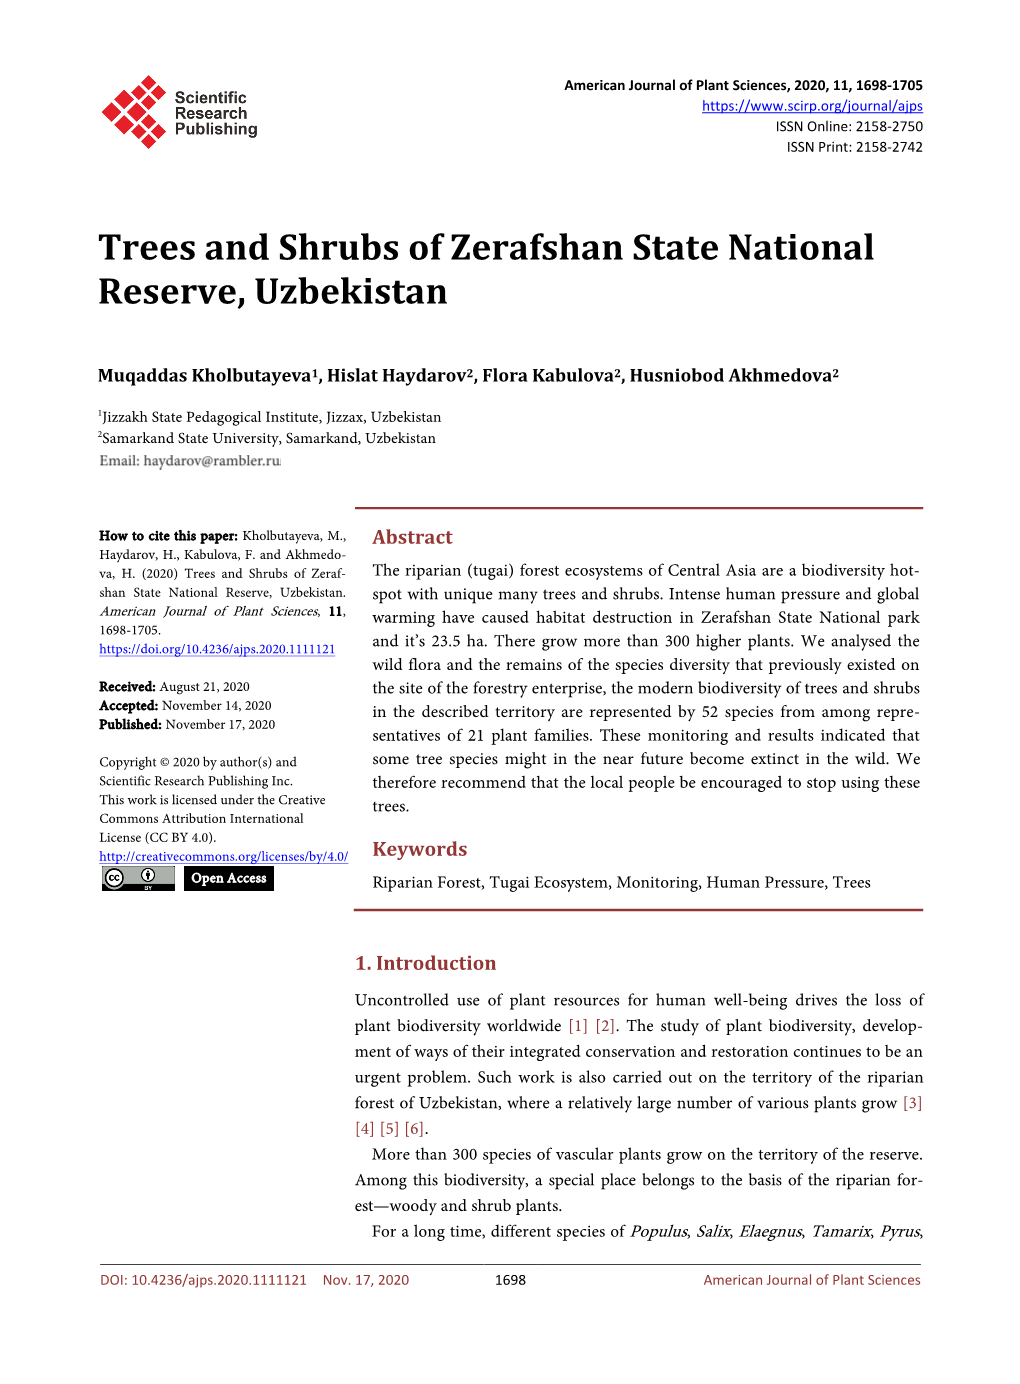 Trees and Shrubs of Zerafshan State National Reserve, Uzbekistan